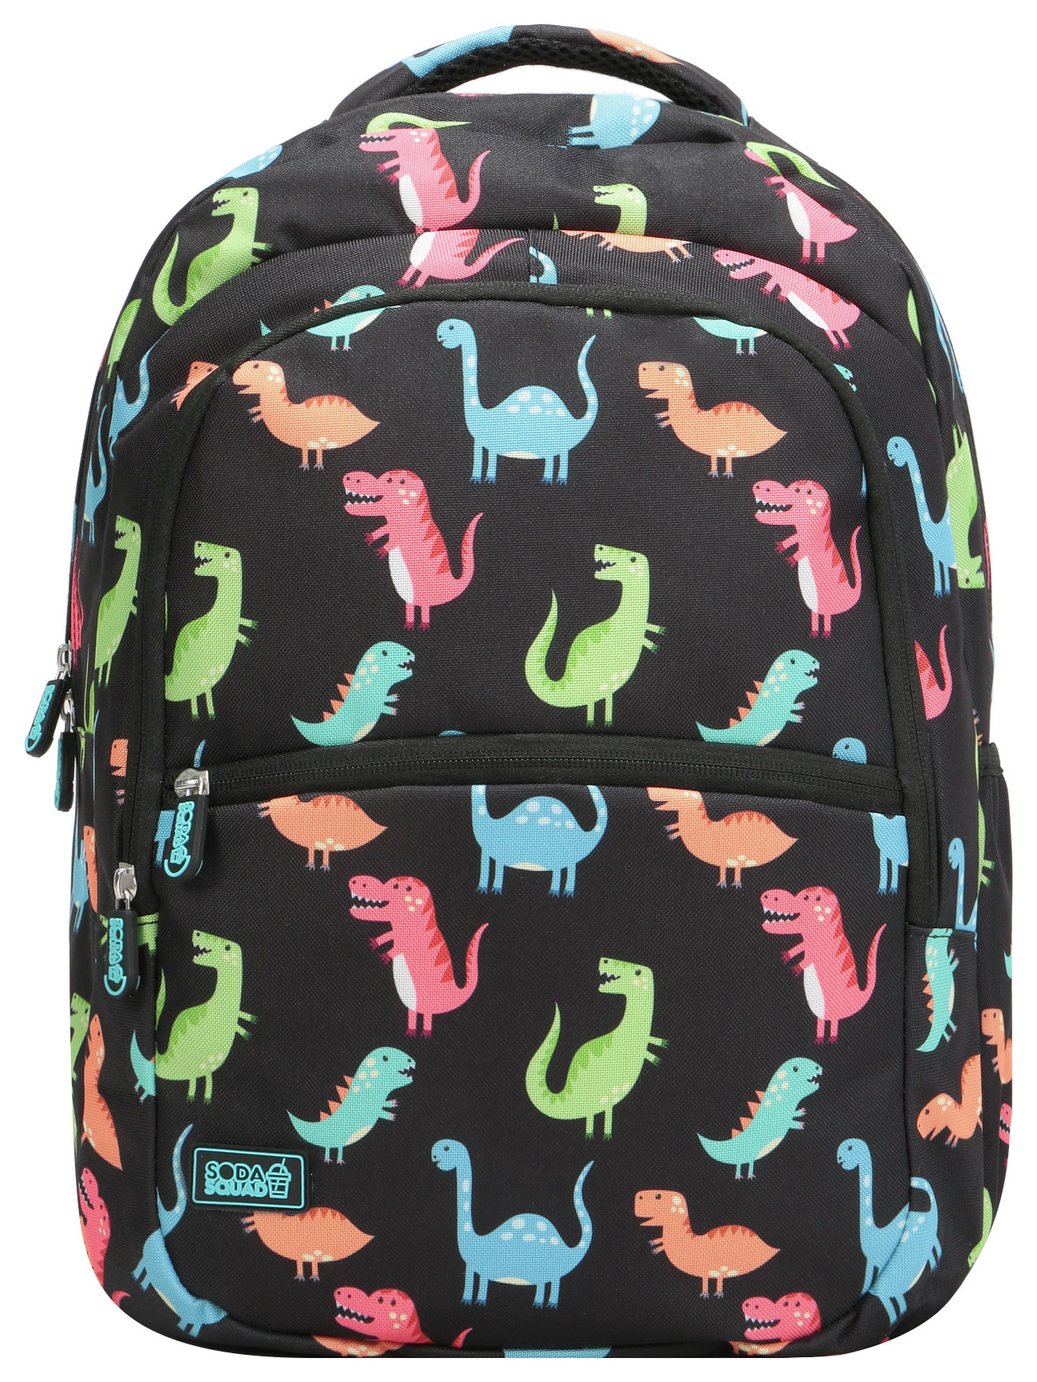 Soda Squad Dinosaurs 22L Backpack - Black